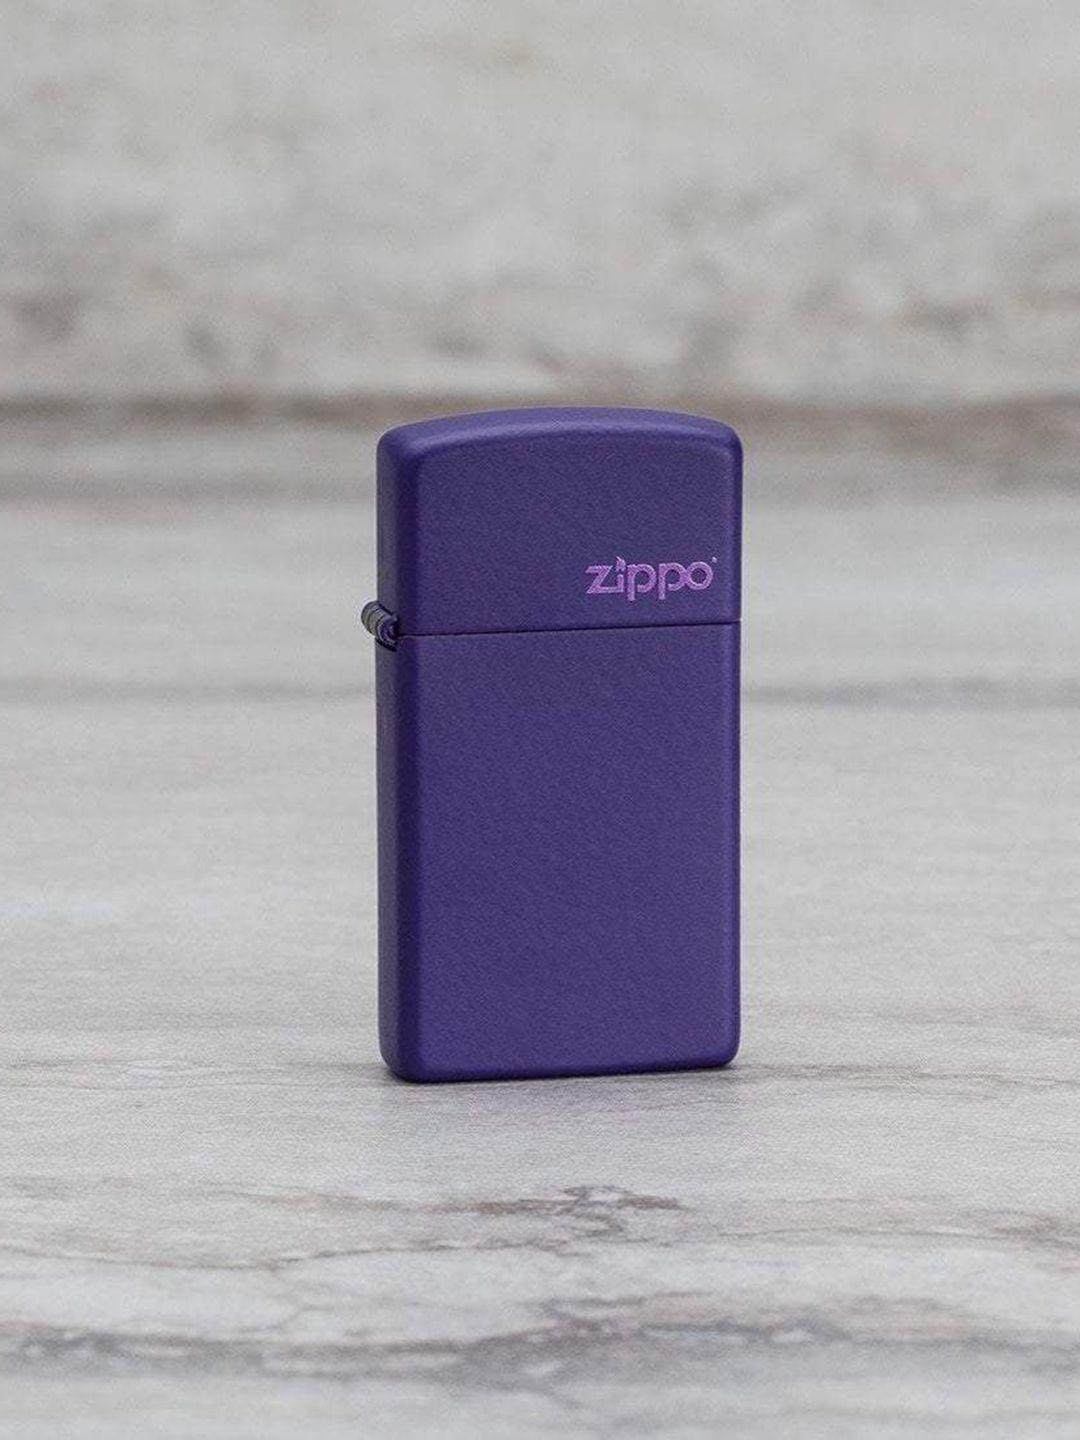 zippo unisex purple matte pocket lighter